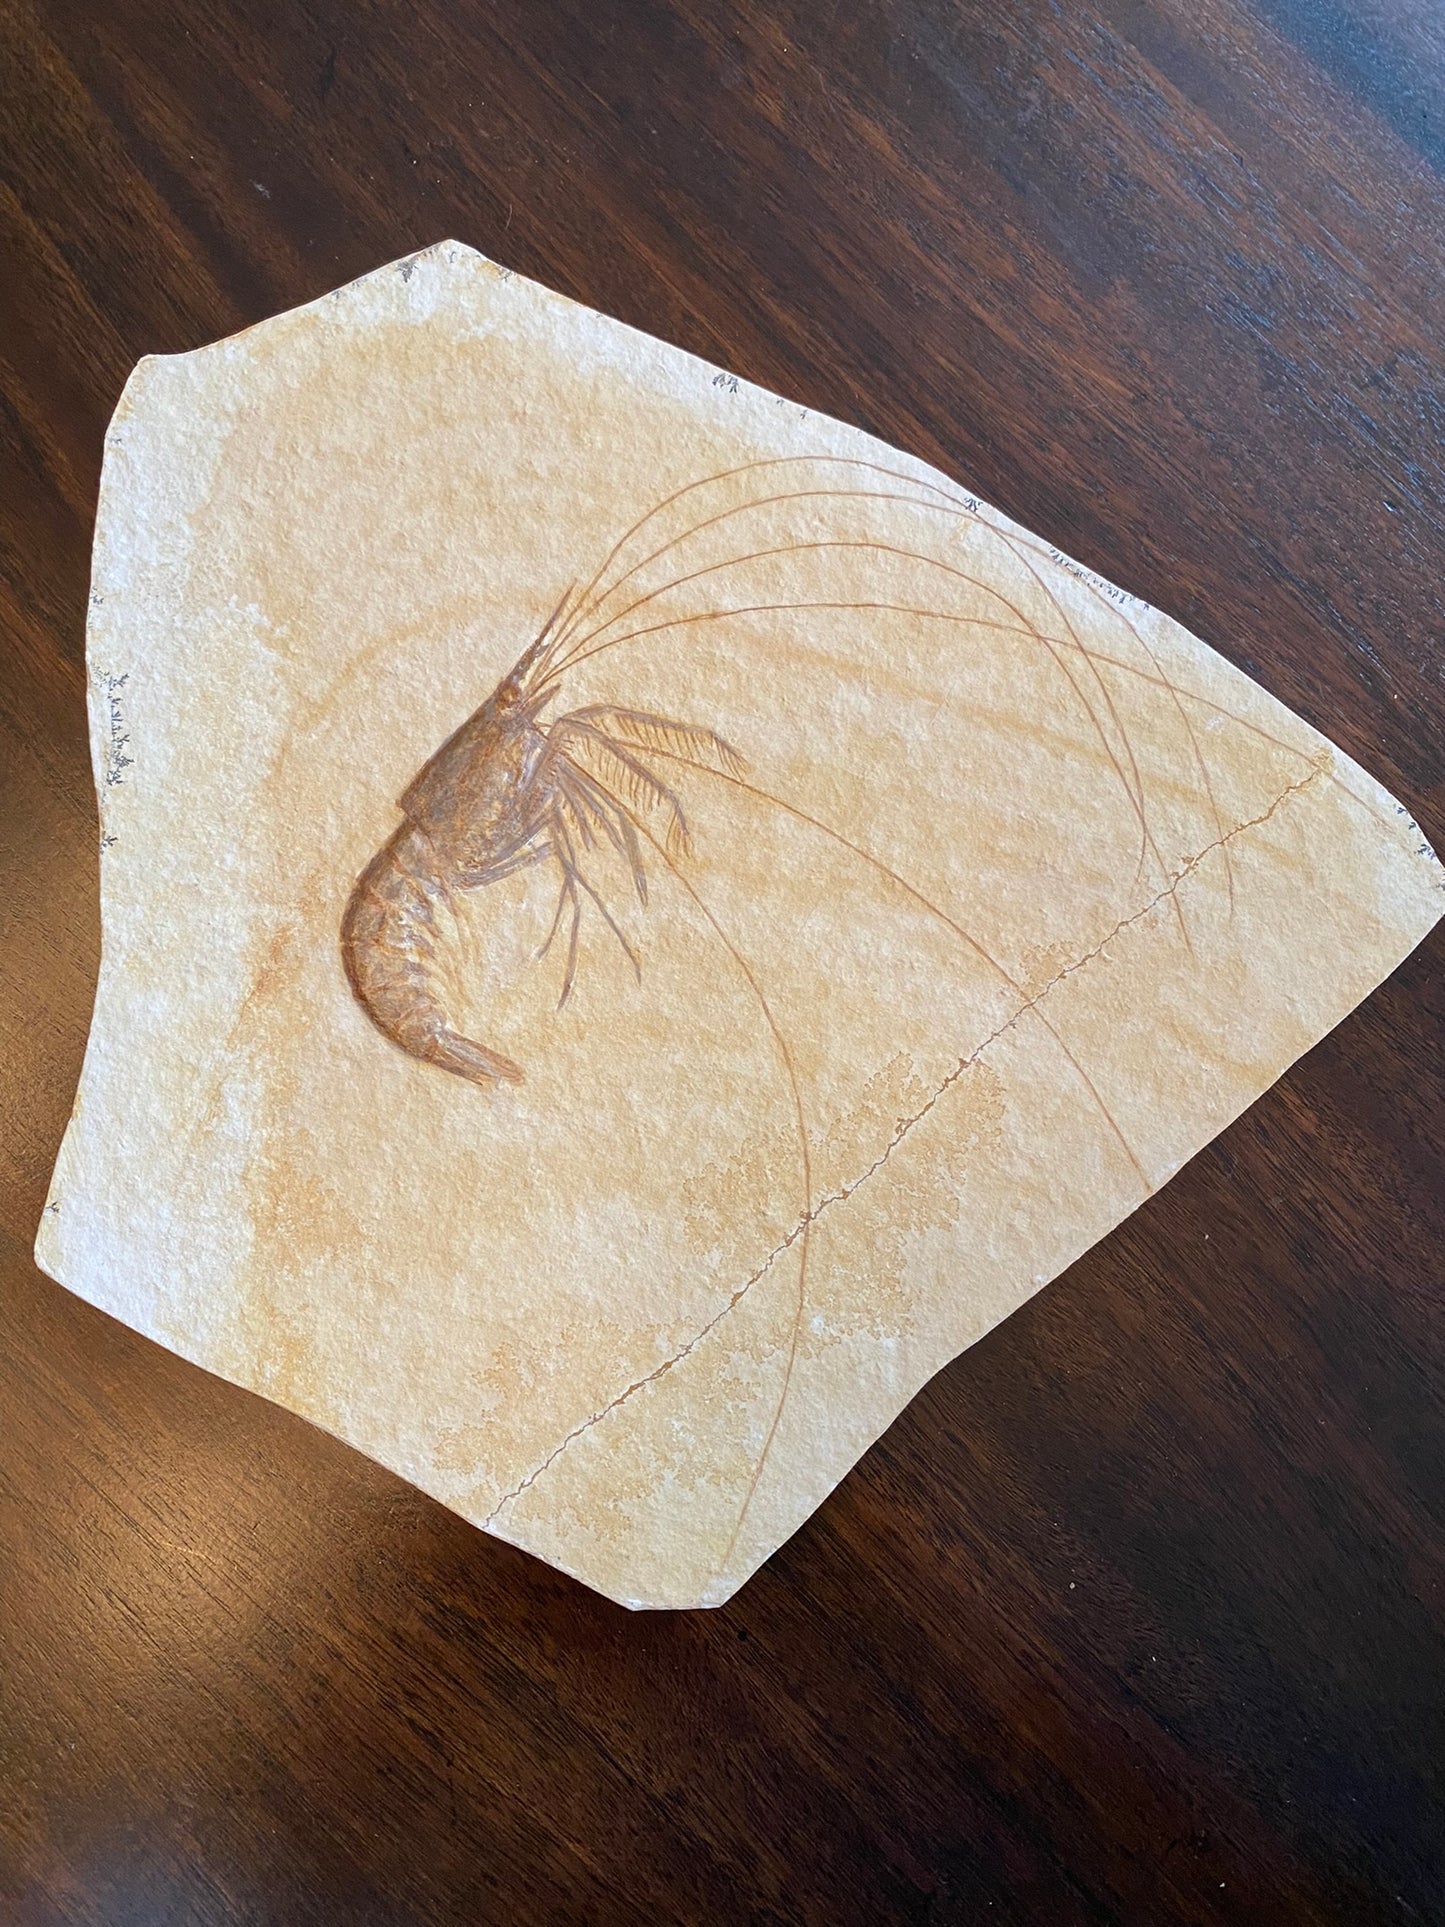 Fossil shrimp (Aeger tipularius), Solnhoften, Germany